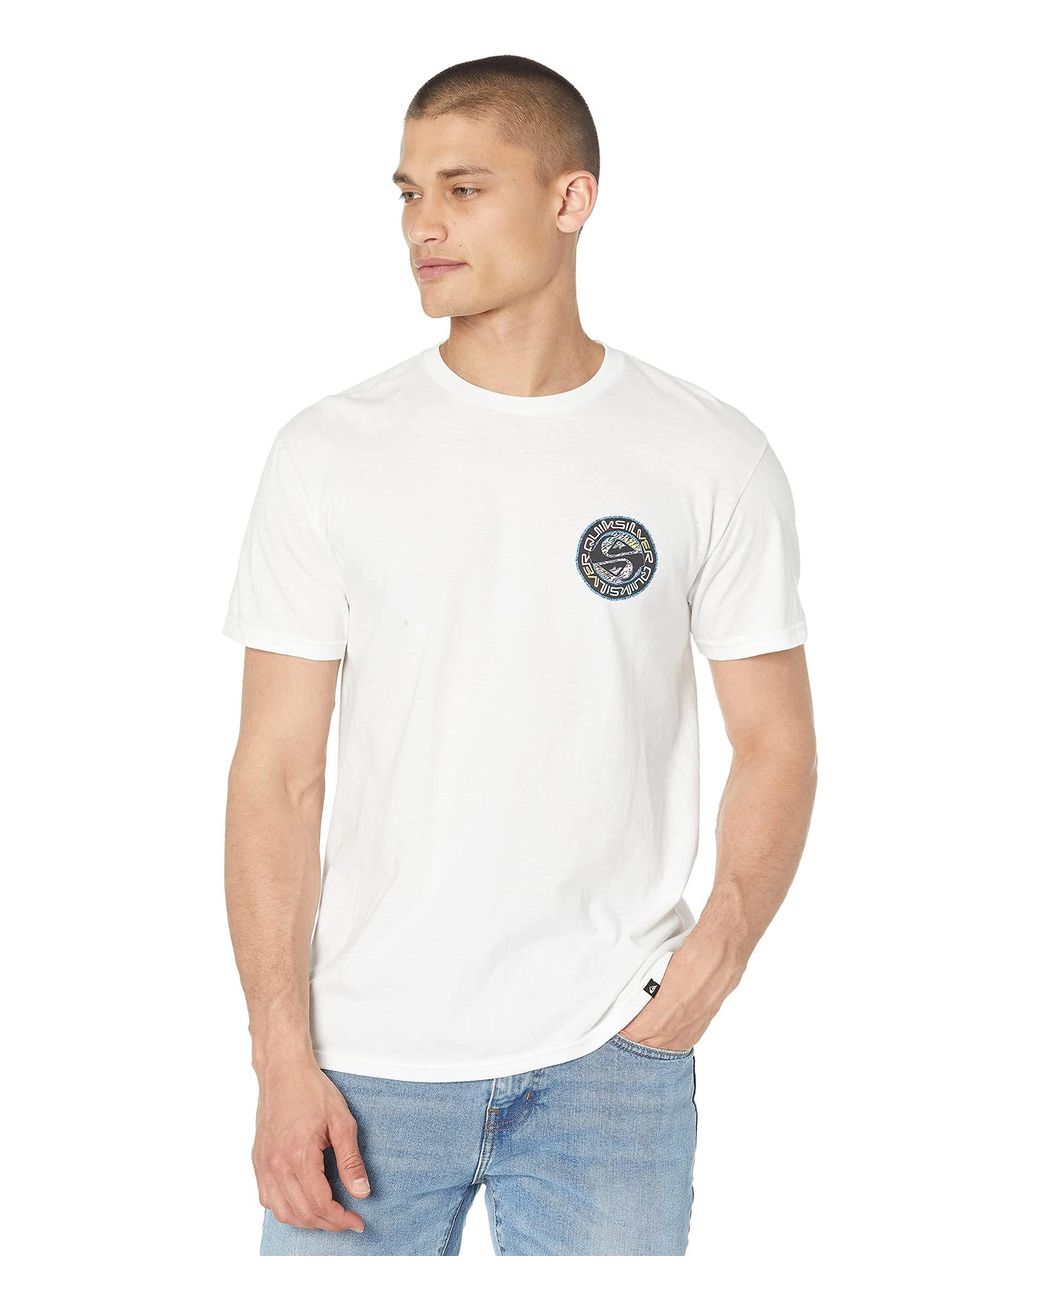 Quiksilver Men's Short Sleeve Summer Surf Graphic T-Shirt Tee 